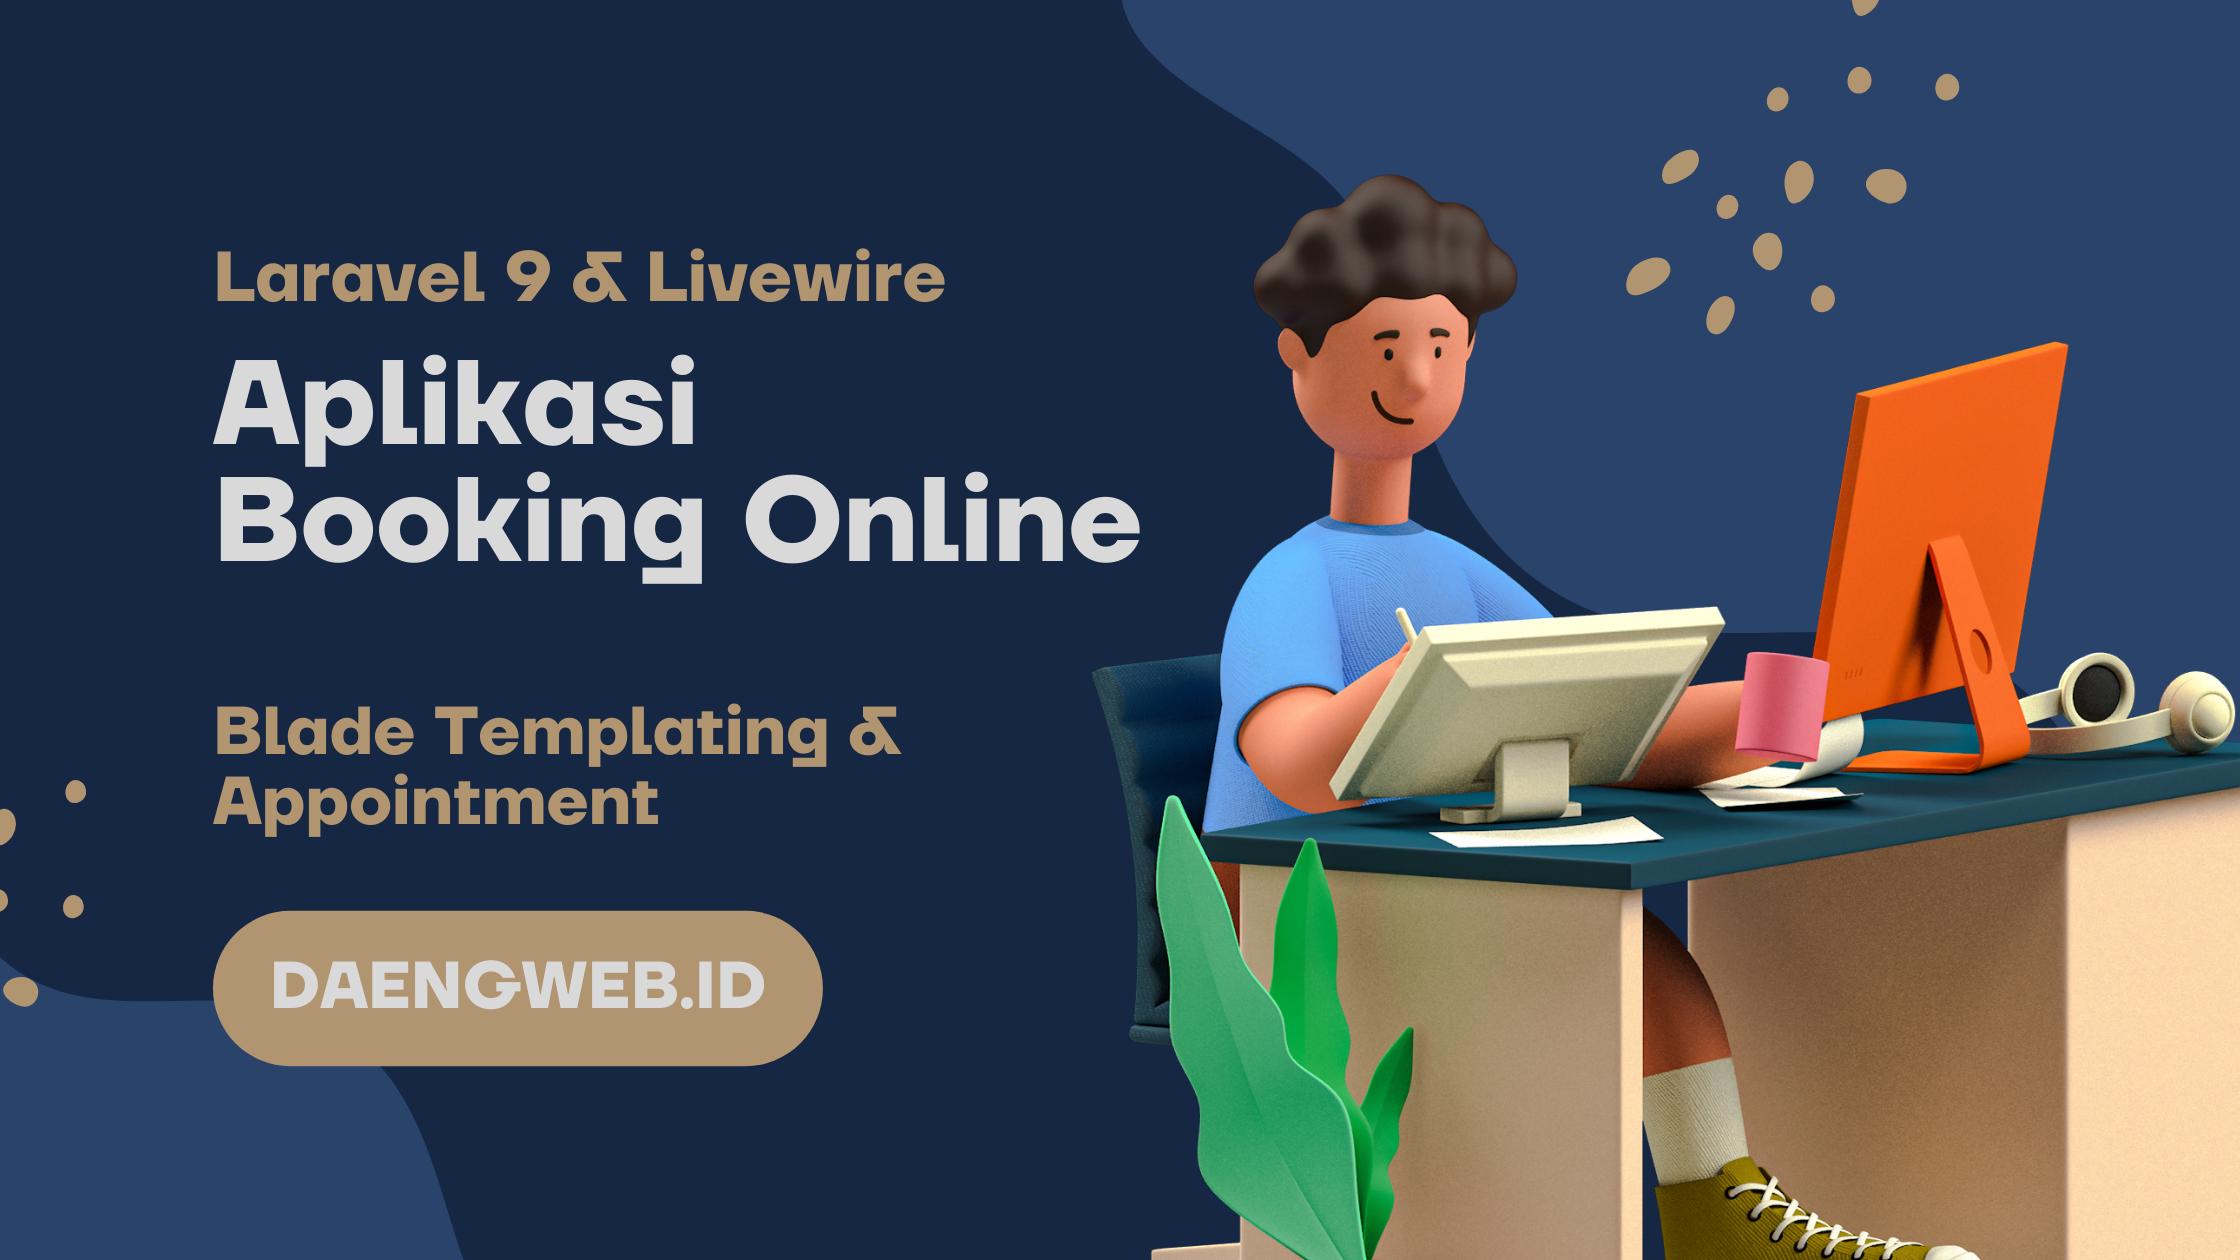 Aplikasi Booking Online Laravel 9 & Livewire #2: Blade Templating & Appointment